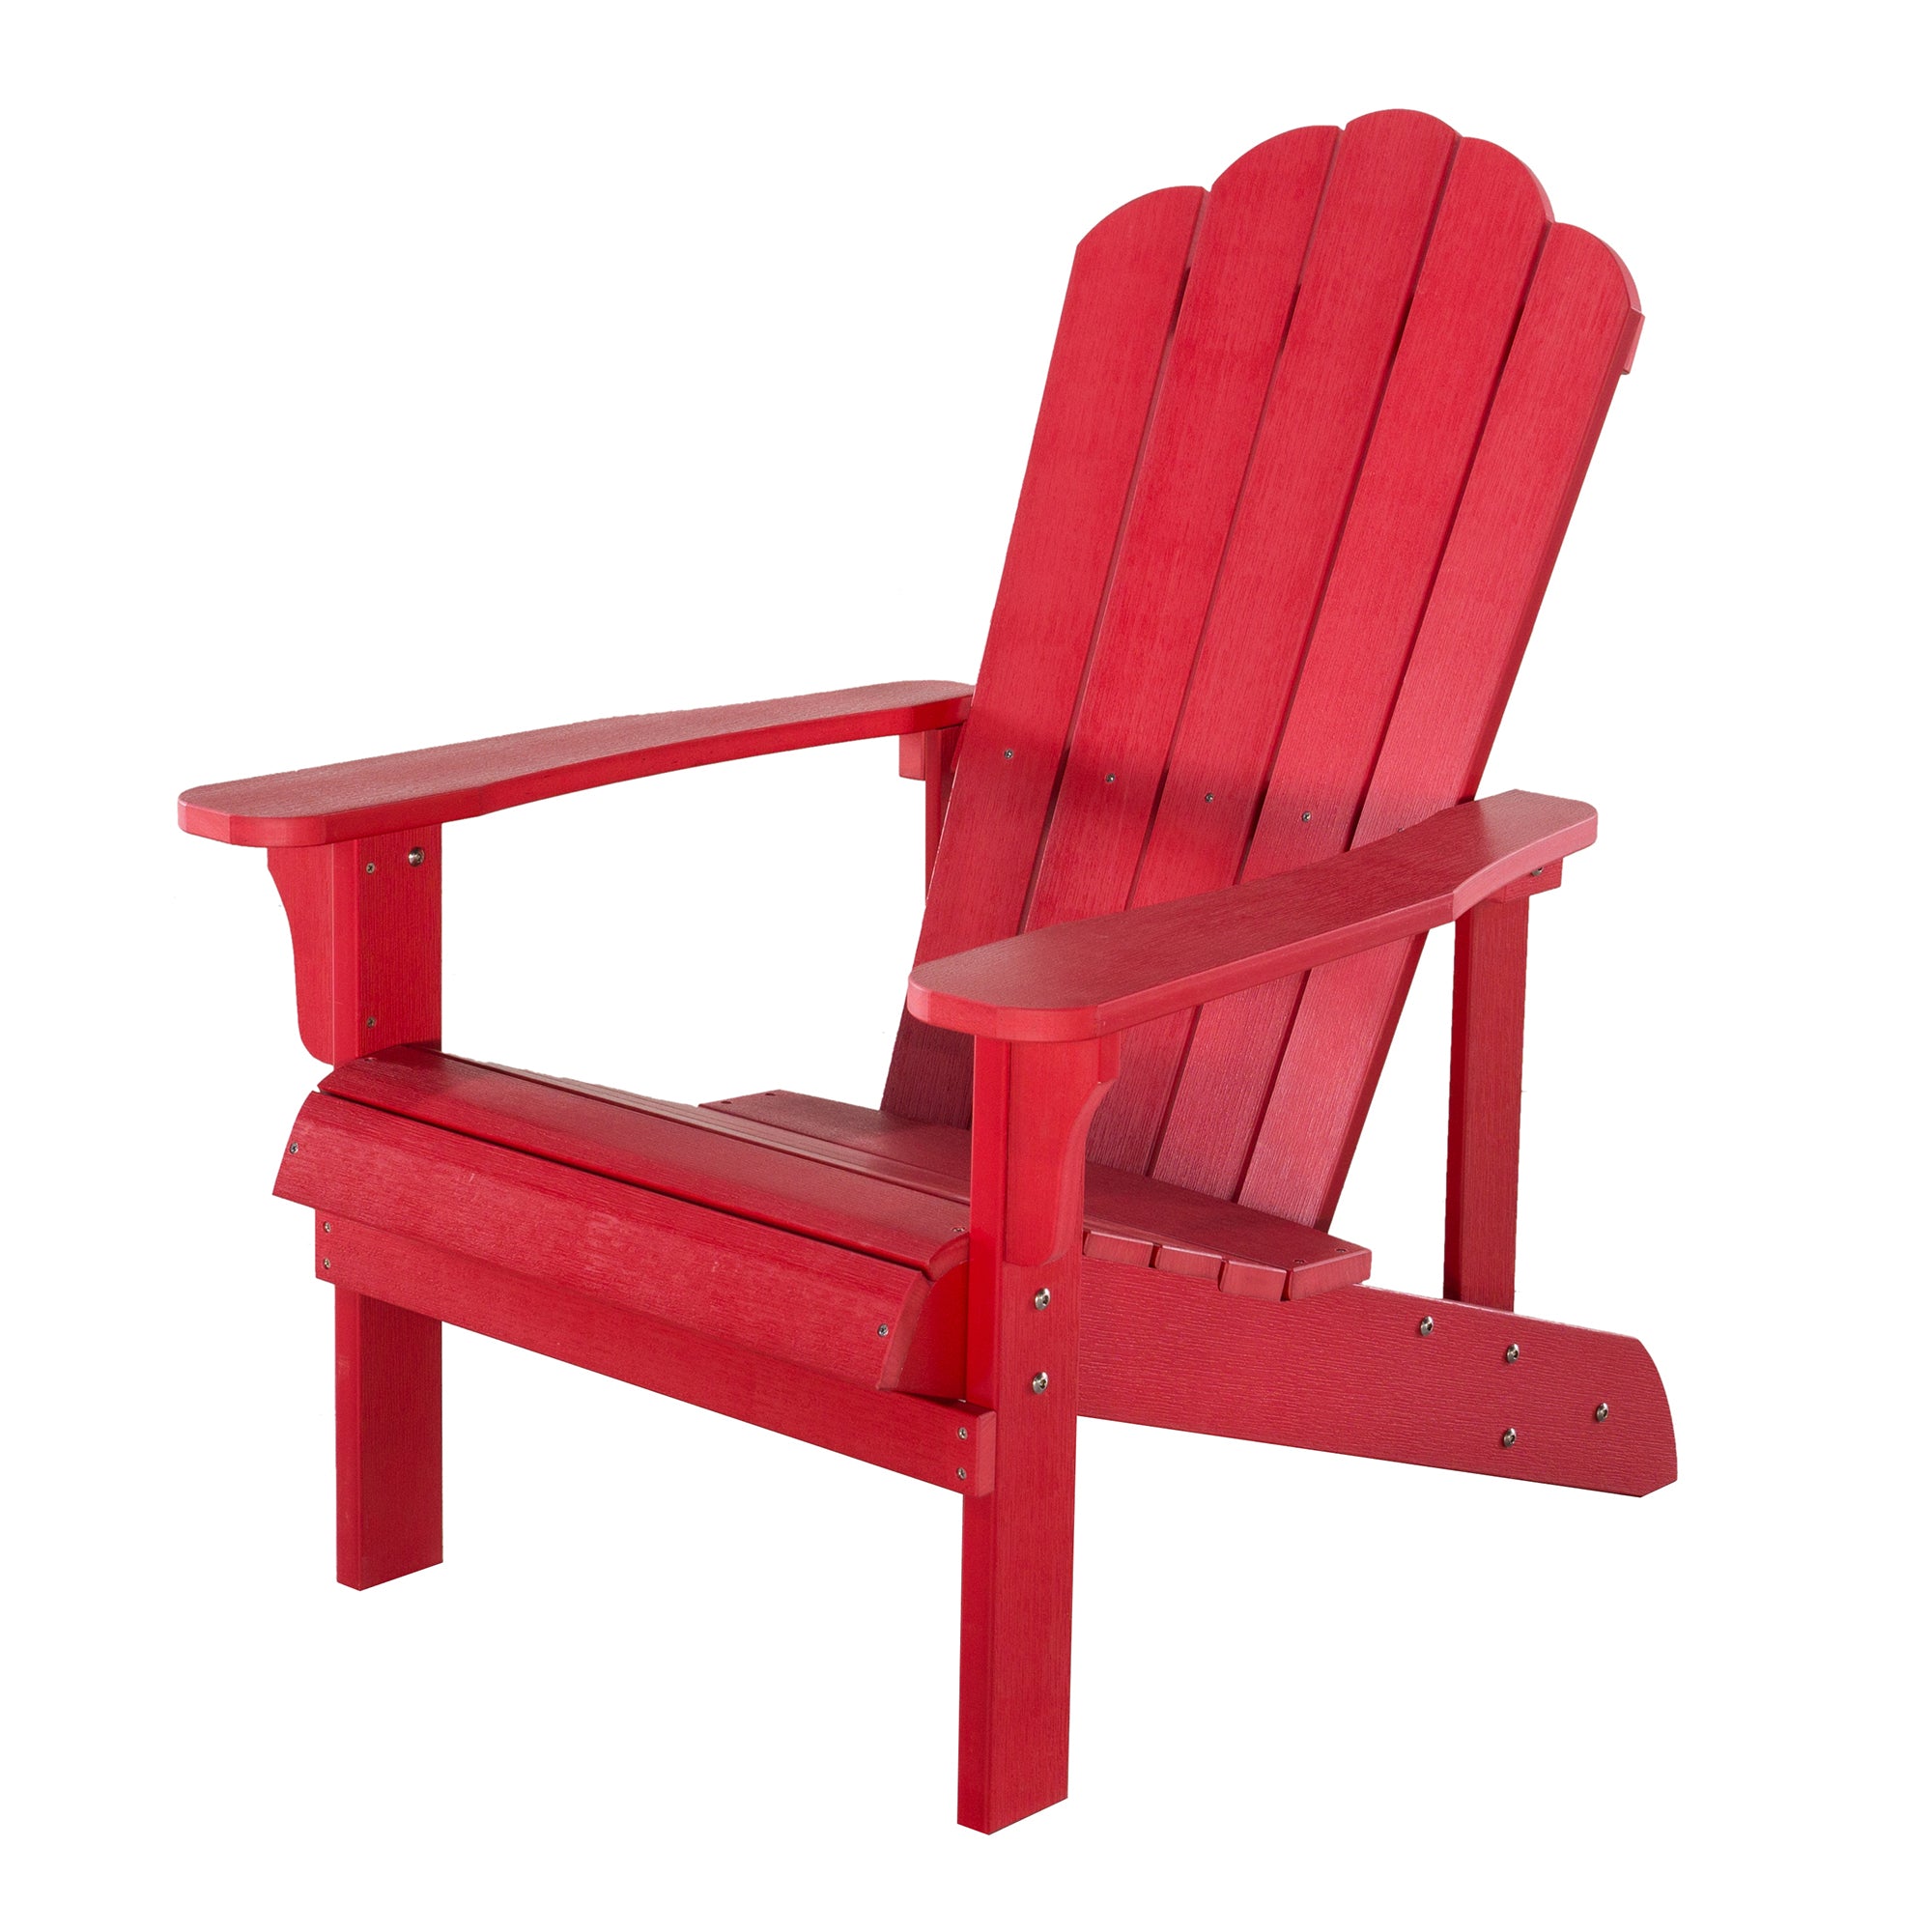 Key West Outdoor Plastic Wood Adirondack Chair, Patio red-polyethylene